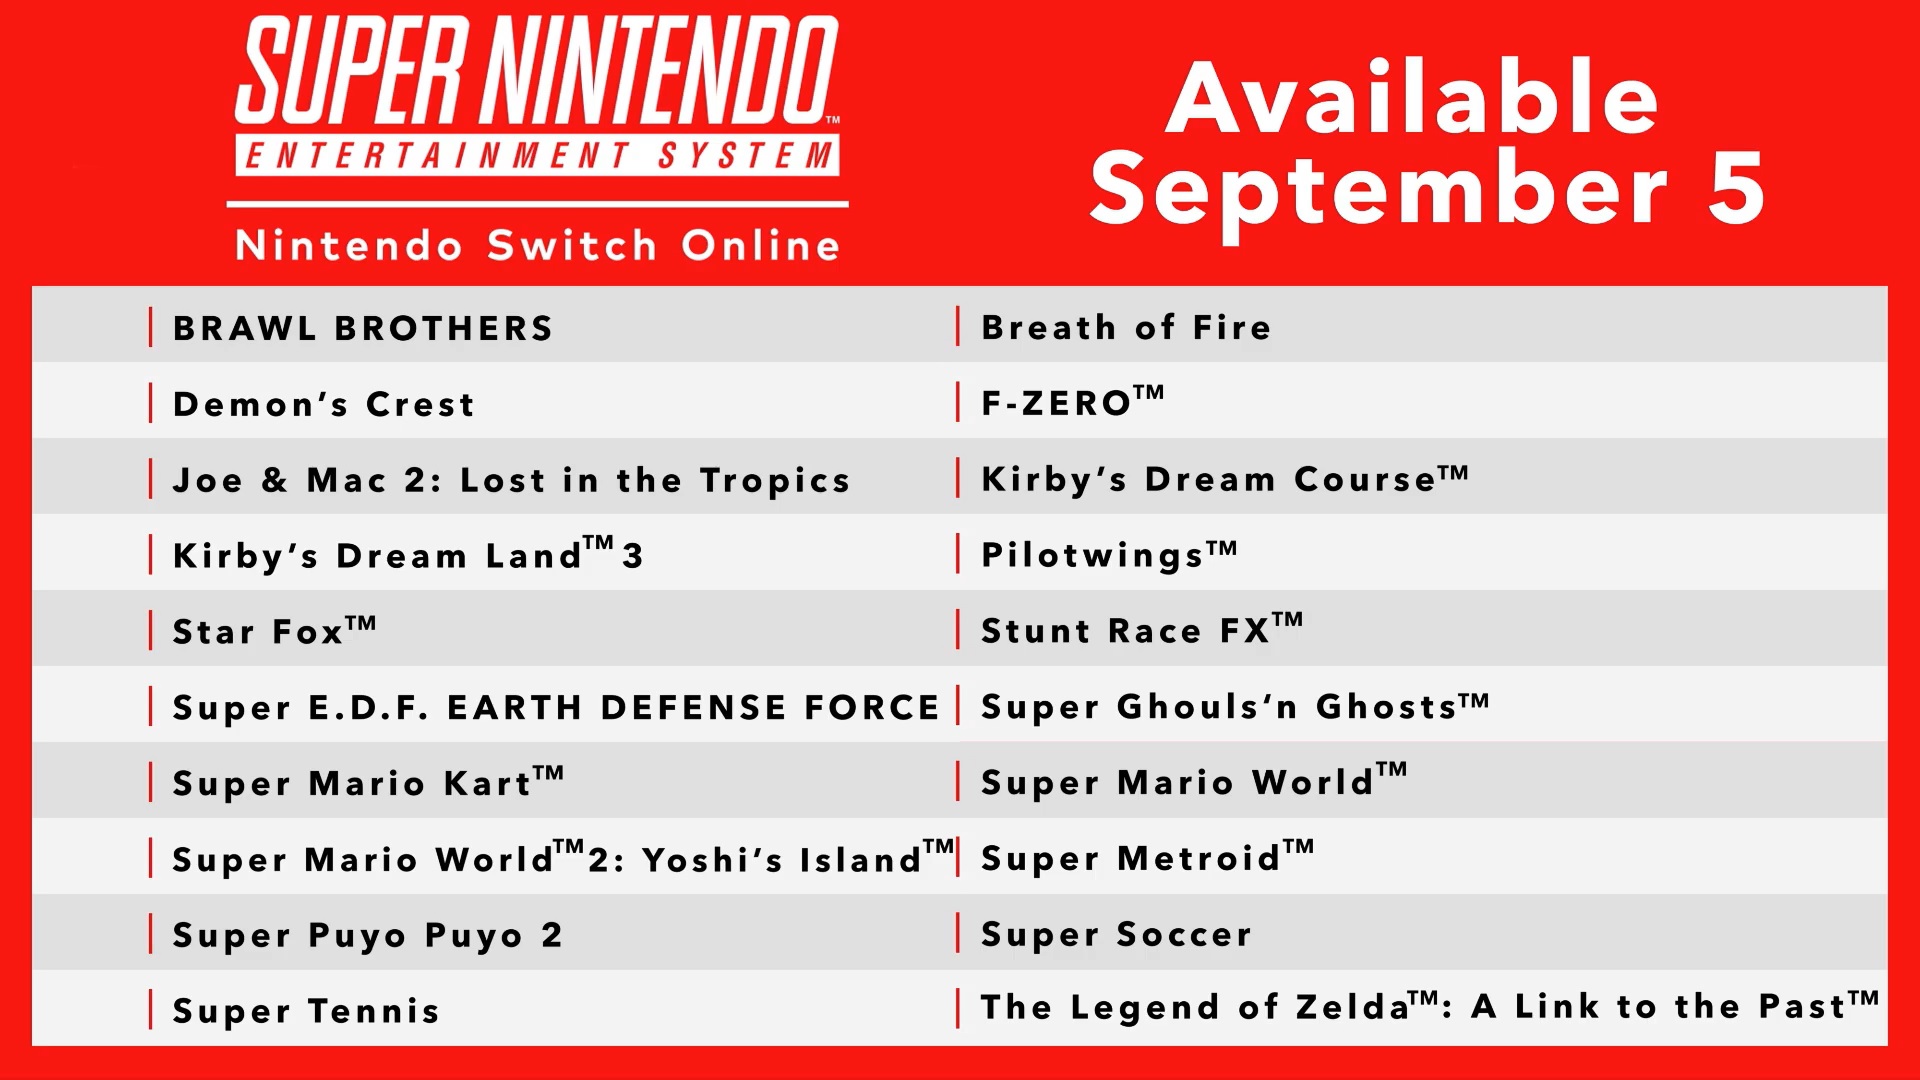 SNES OTG: Nintendo Switch Online will get 20 Super Nintendo games  Septermber 5th -  News